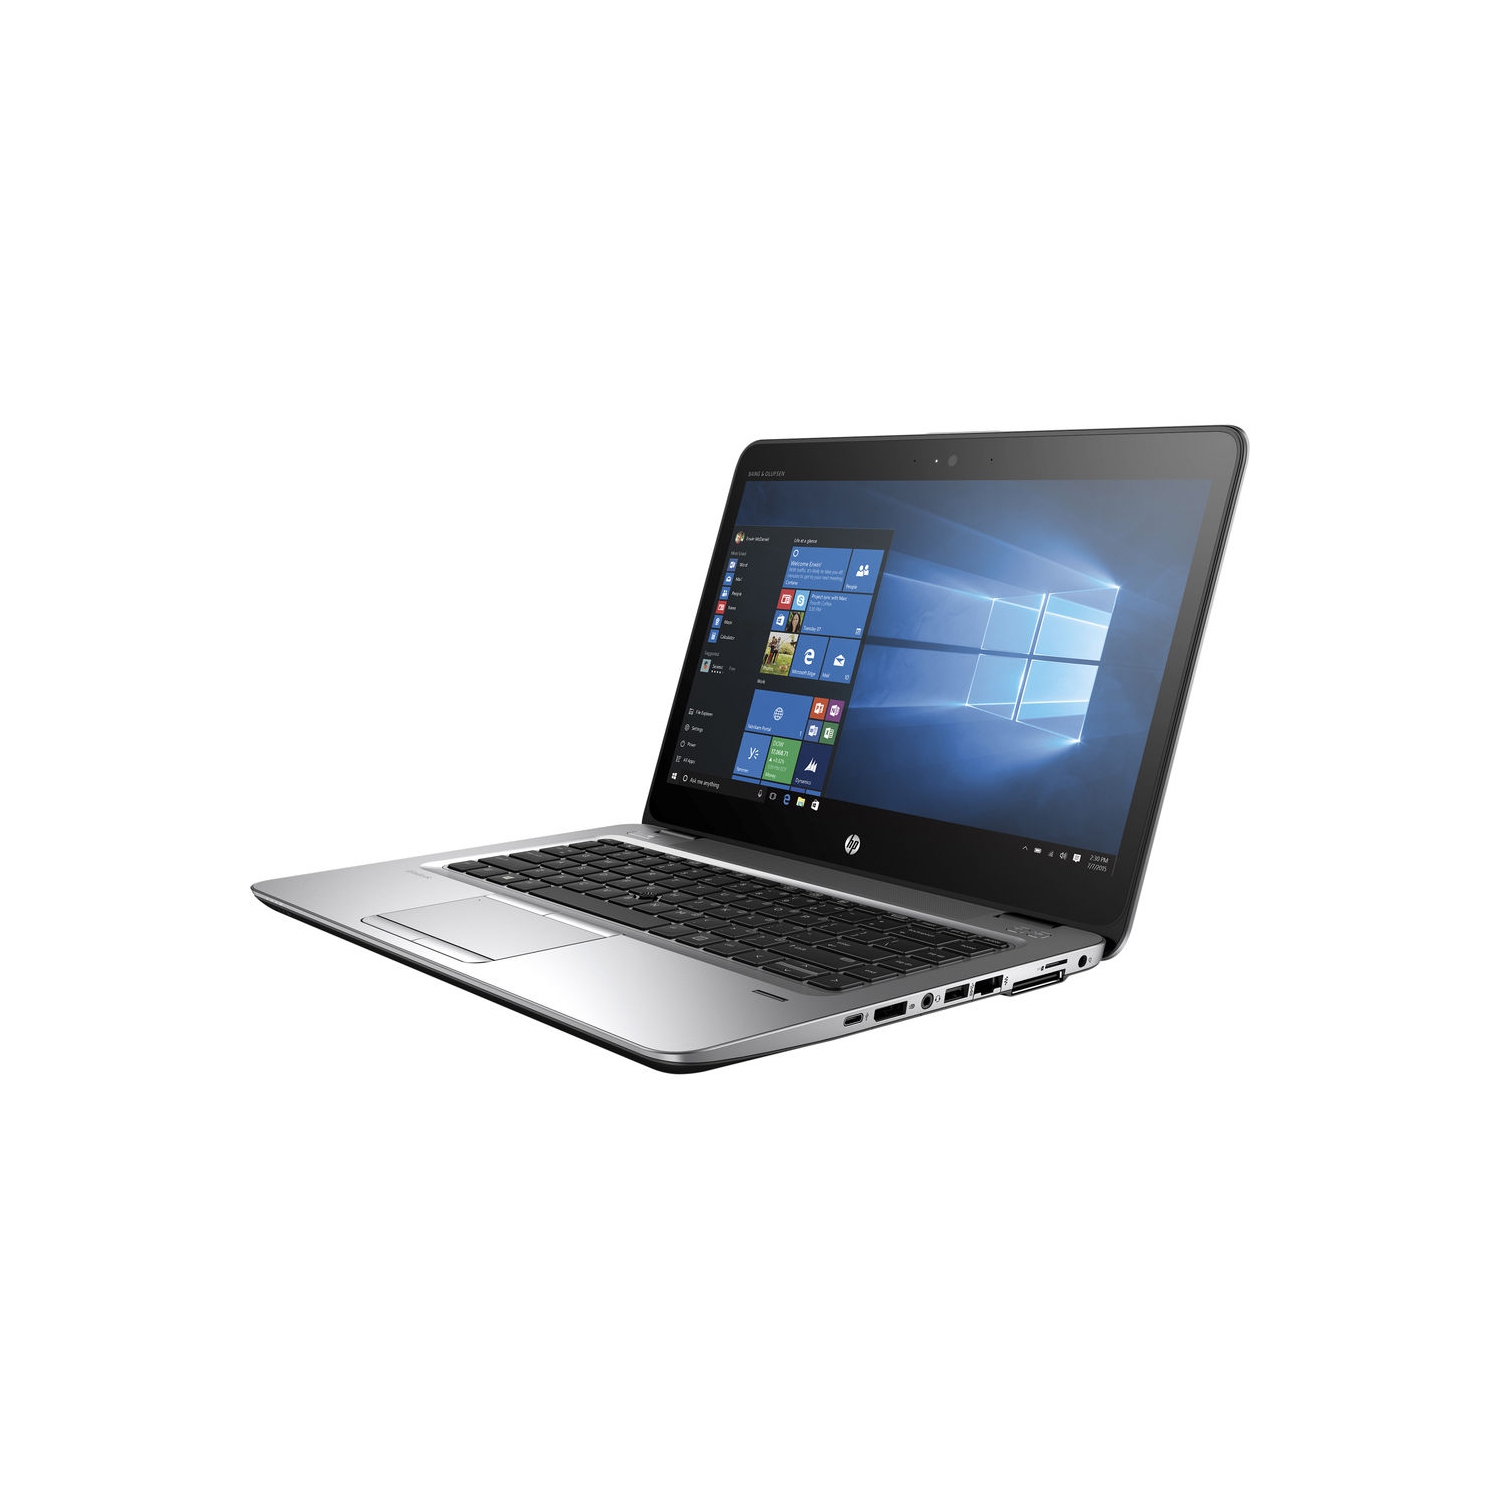 HP EliteBook 840 G3 14" Laptop - Intel Core i5-6300u - 8GB RAM - 256GB SSD - Windows 10 Pro - Refurbished